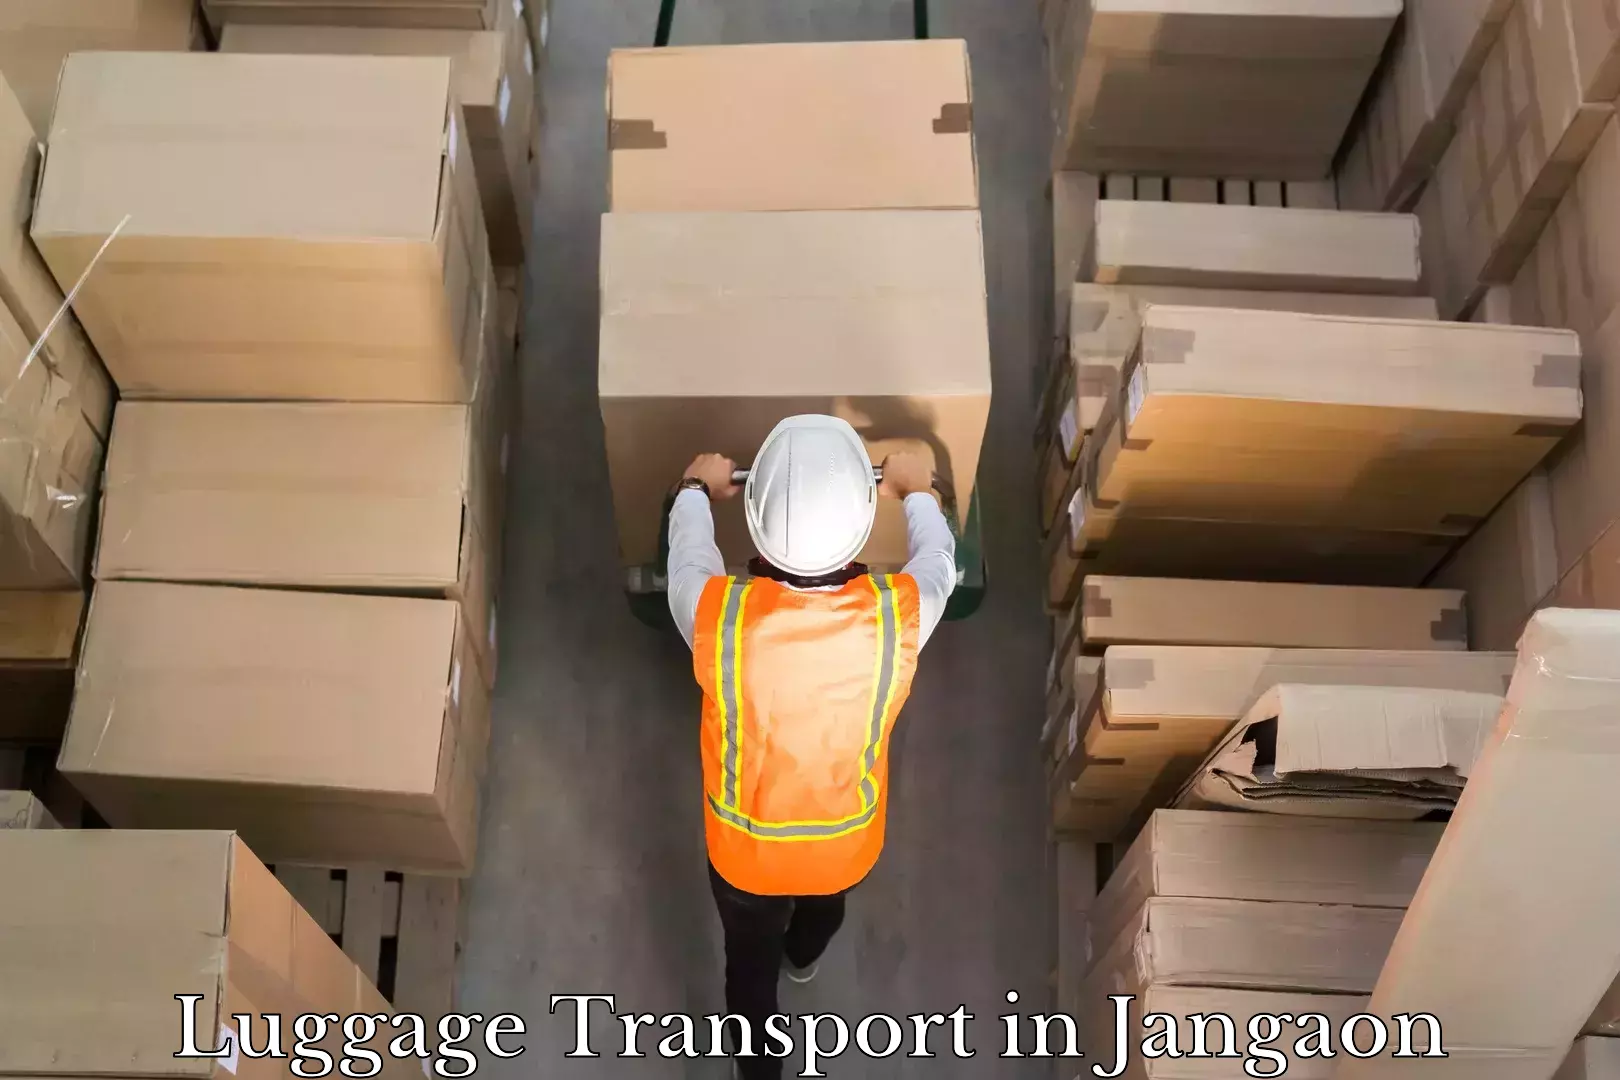 Luggage transport service in Jangaon